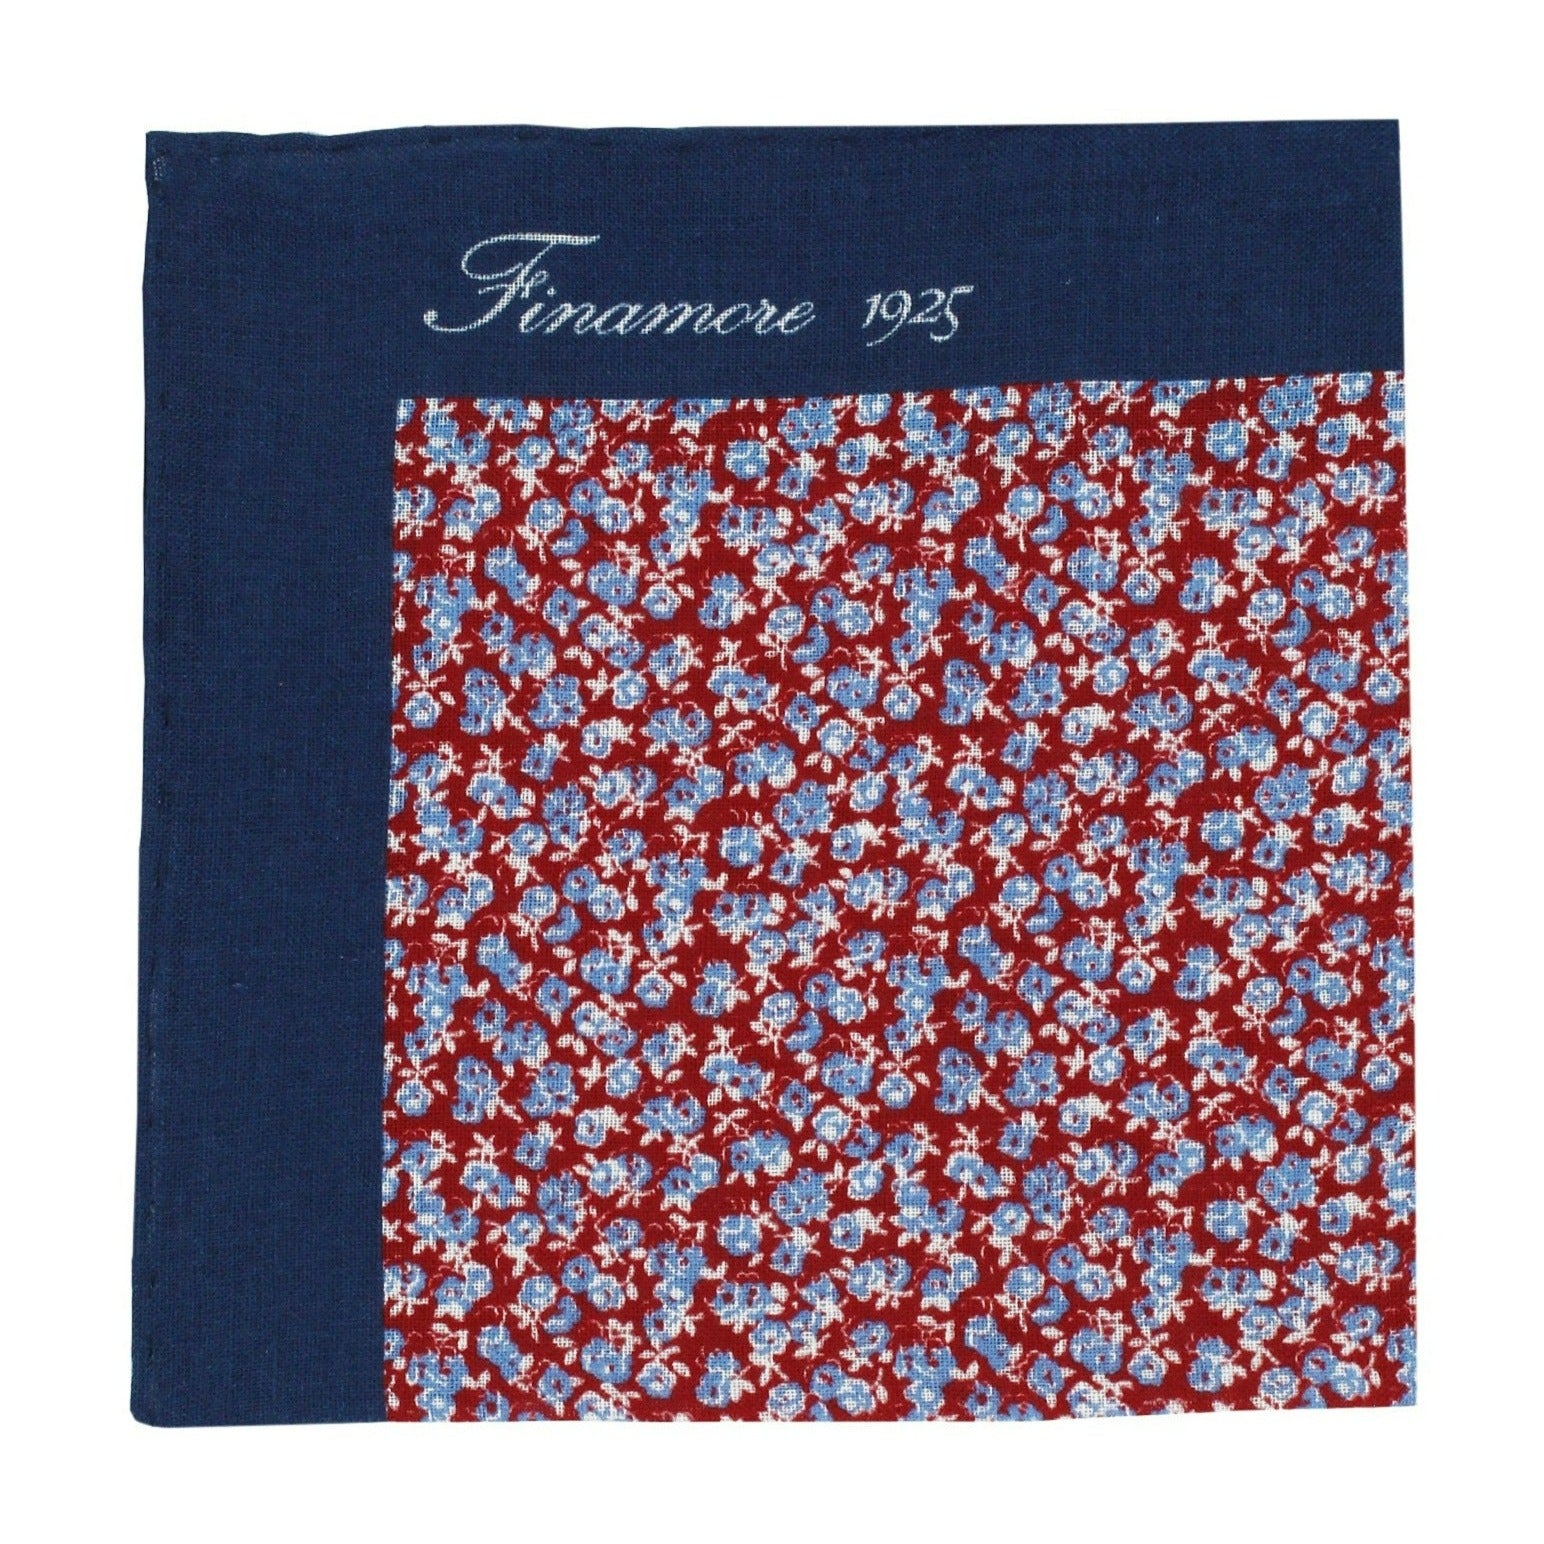 Linen pocket square blue red flower background with dark blue border